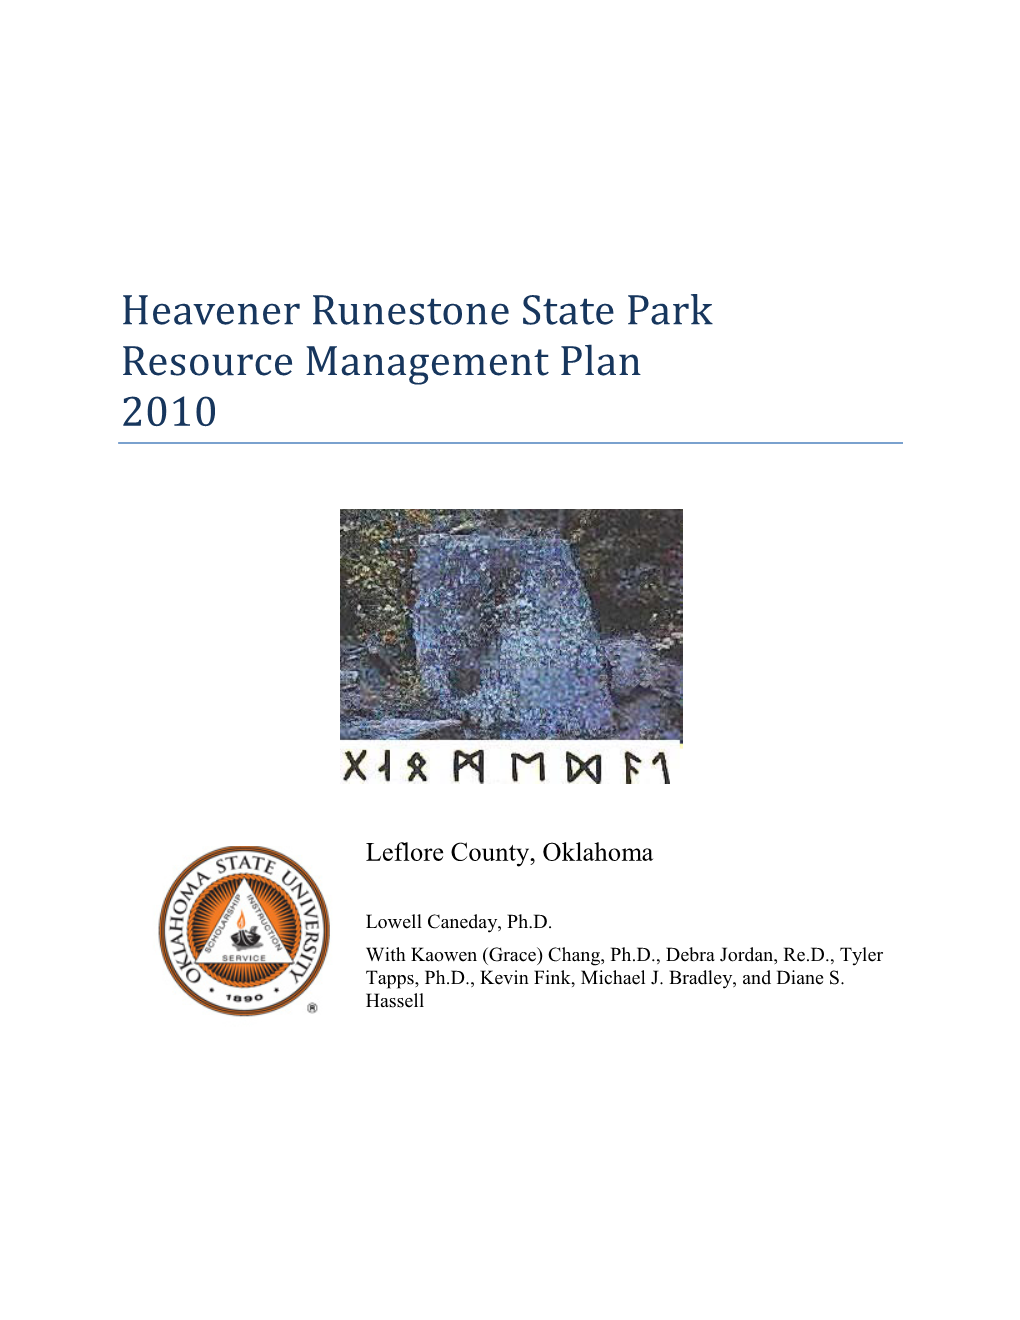 Heavener Runestone State Park Resource Management Plan 2010